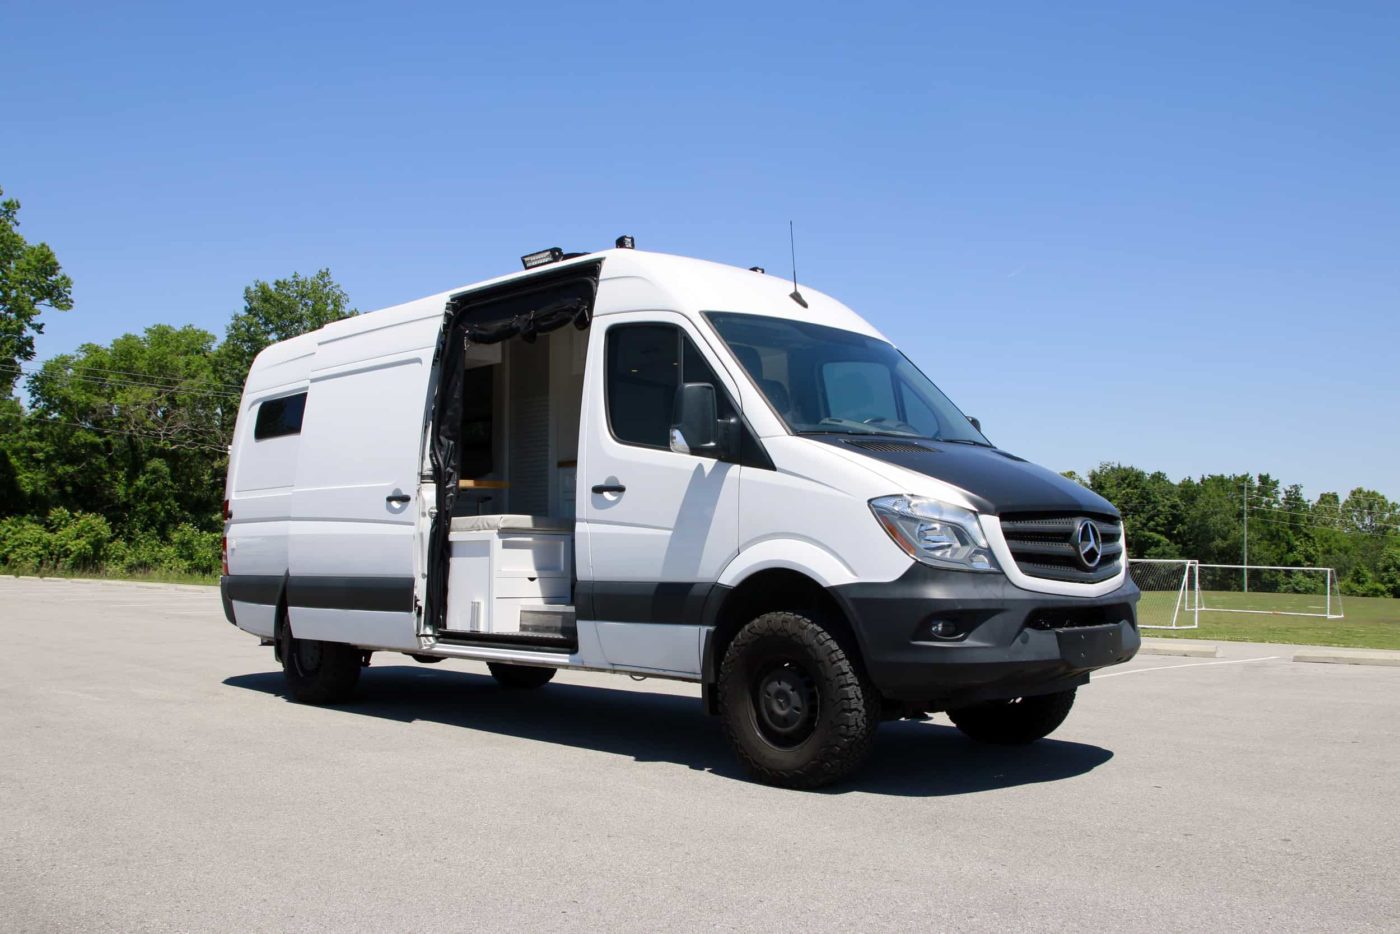 2018 Mercedes Sprinter Camper Van For Sale in Franklin, Tennessee - Van How Much Do Sprinter Van Drivers Make